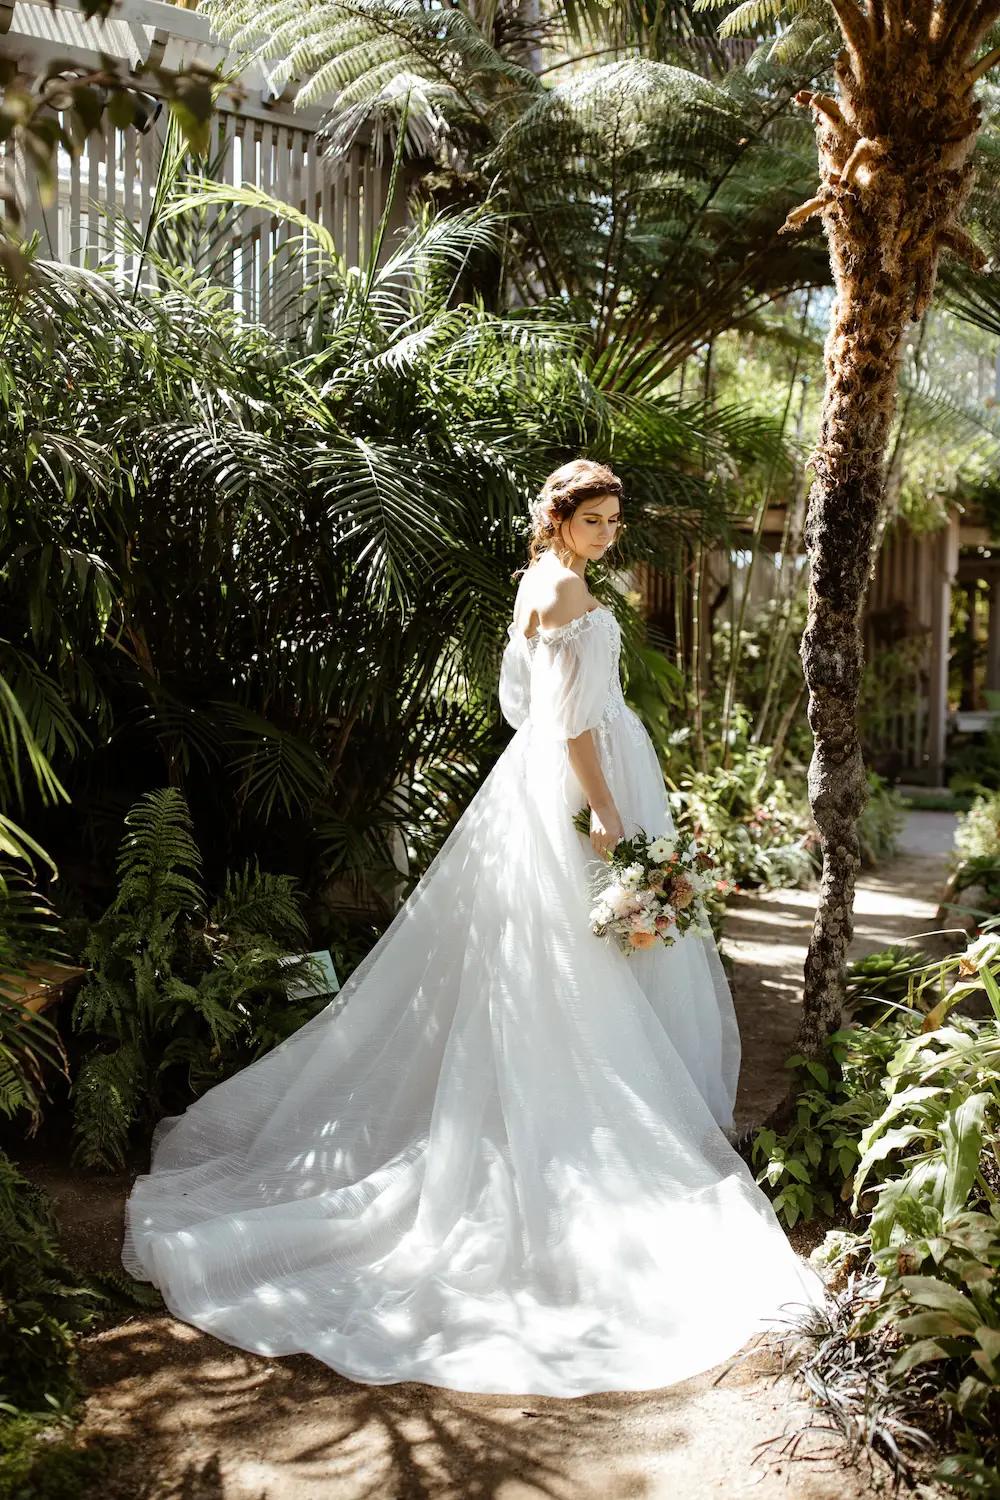 Sydney Wears Romantic Off the Shoulders Wedding Dress. Desktop Image